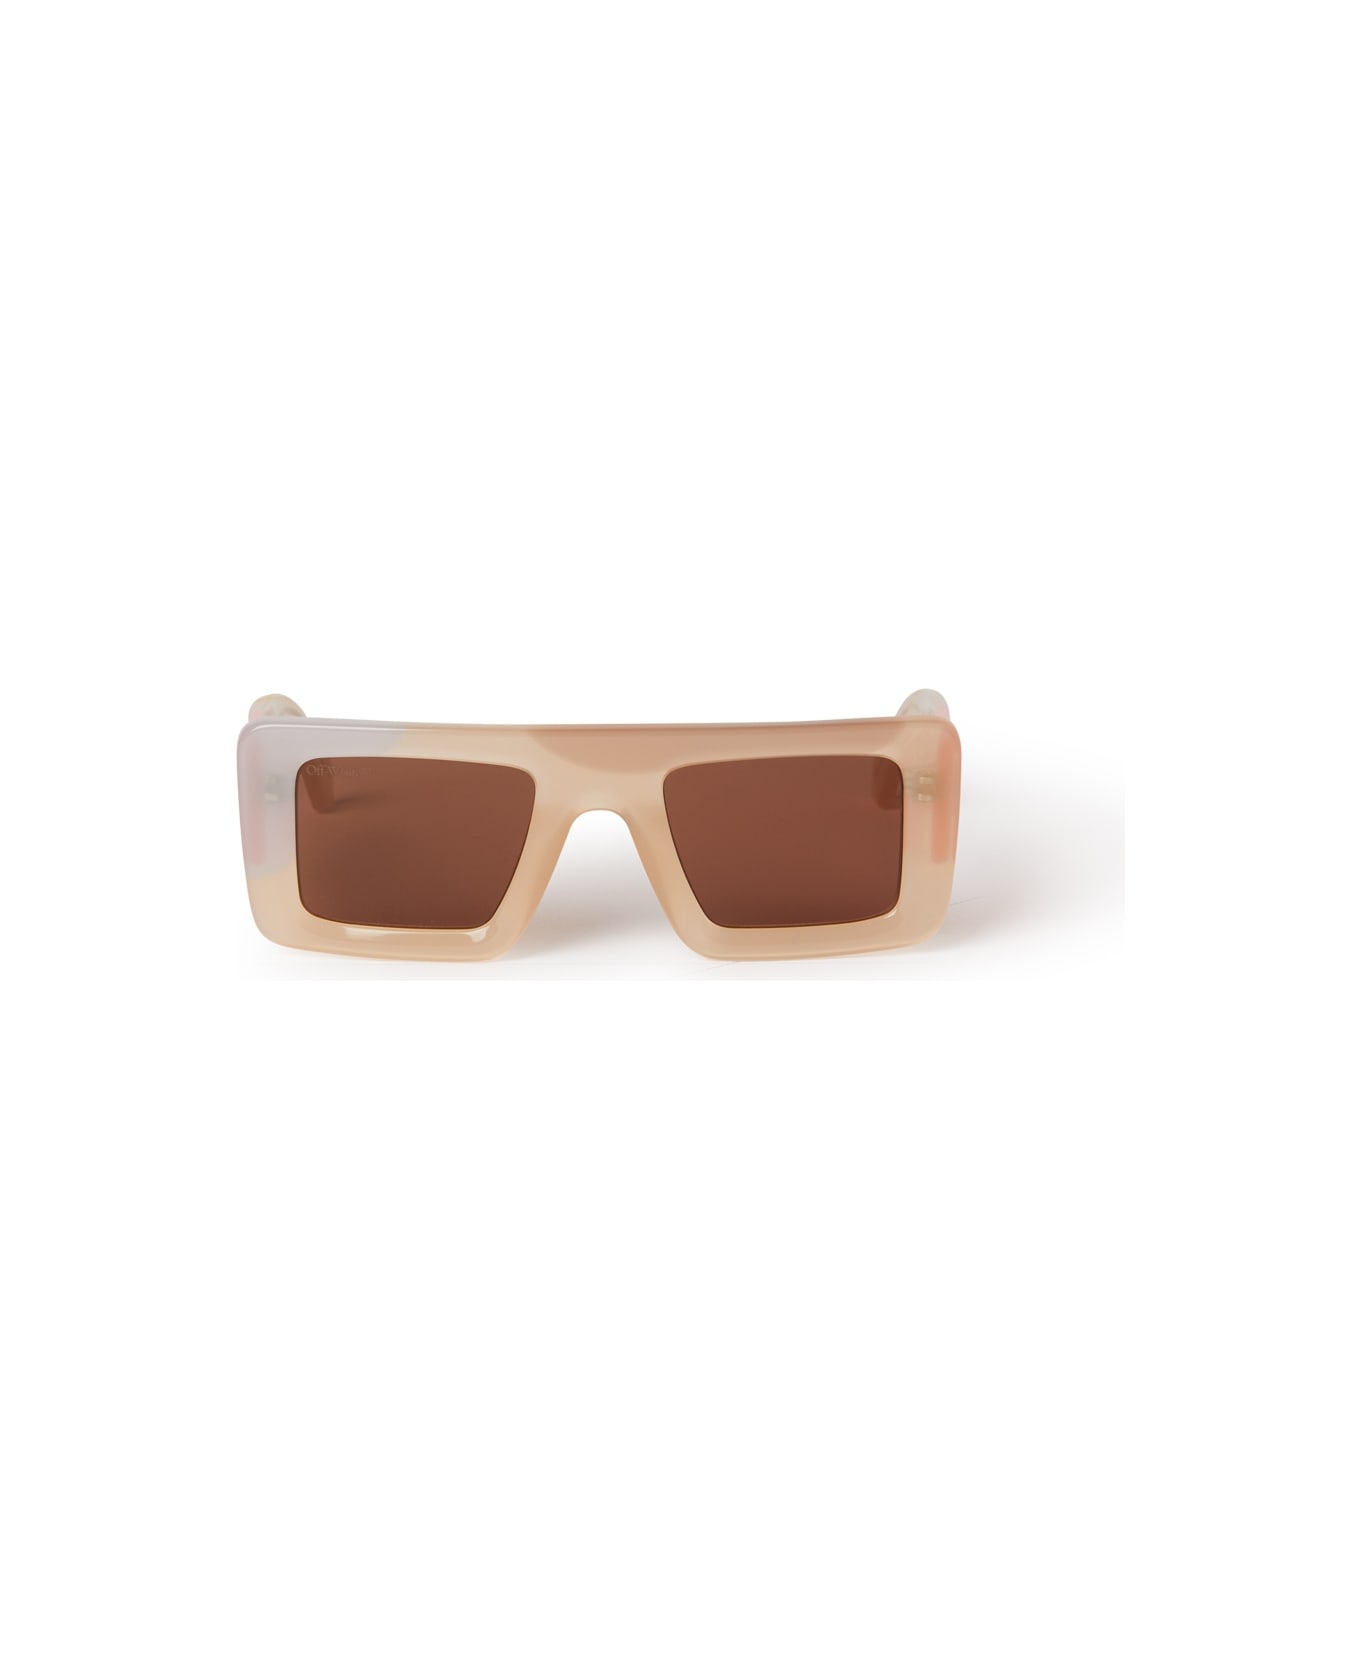 Off-White Seattle Sunglasses Sunglasses - Multicolor サングラス